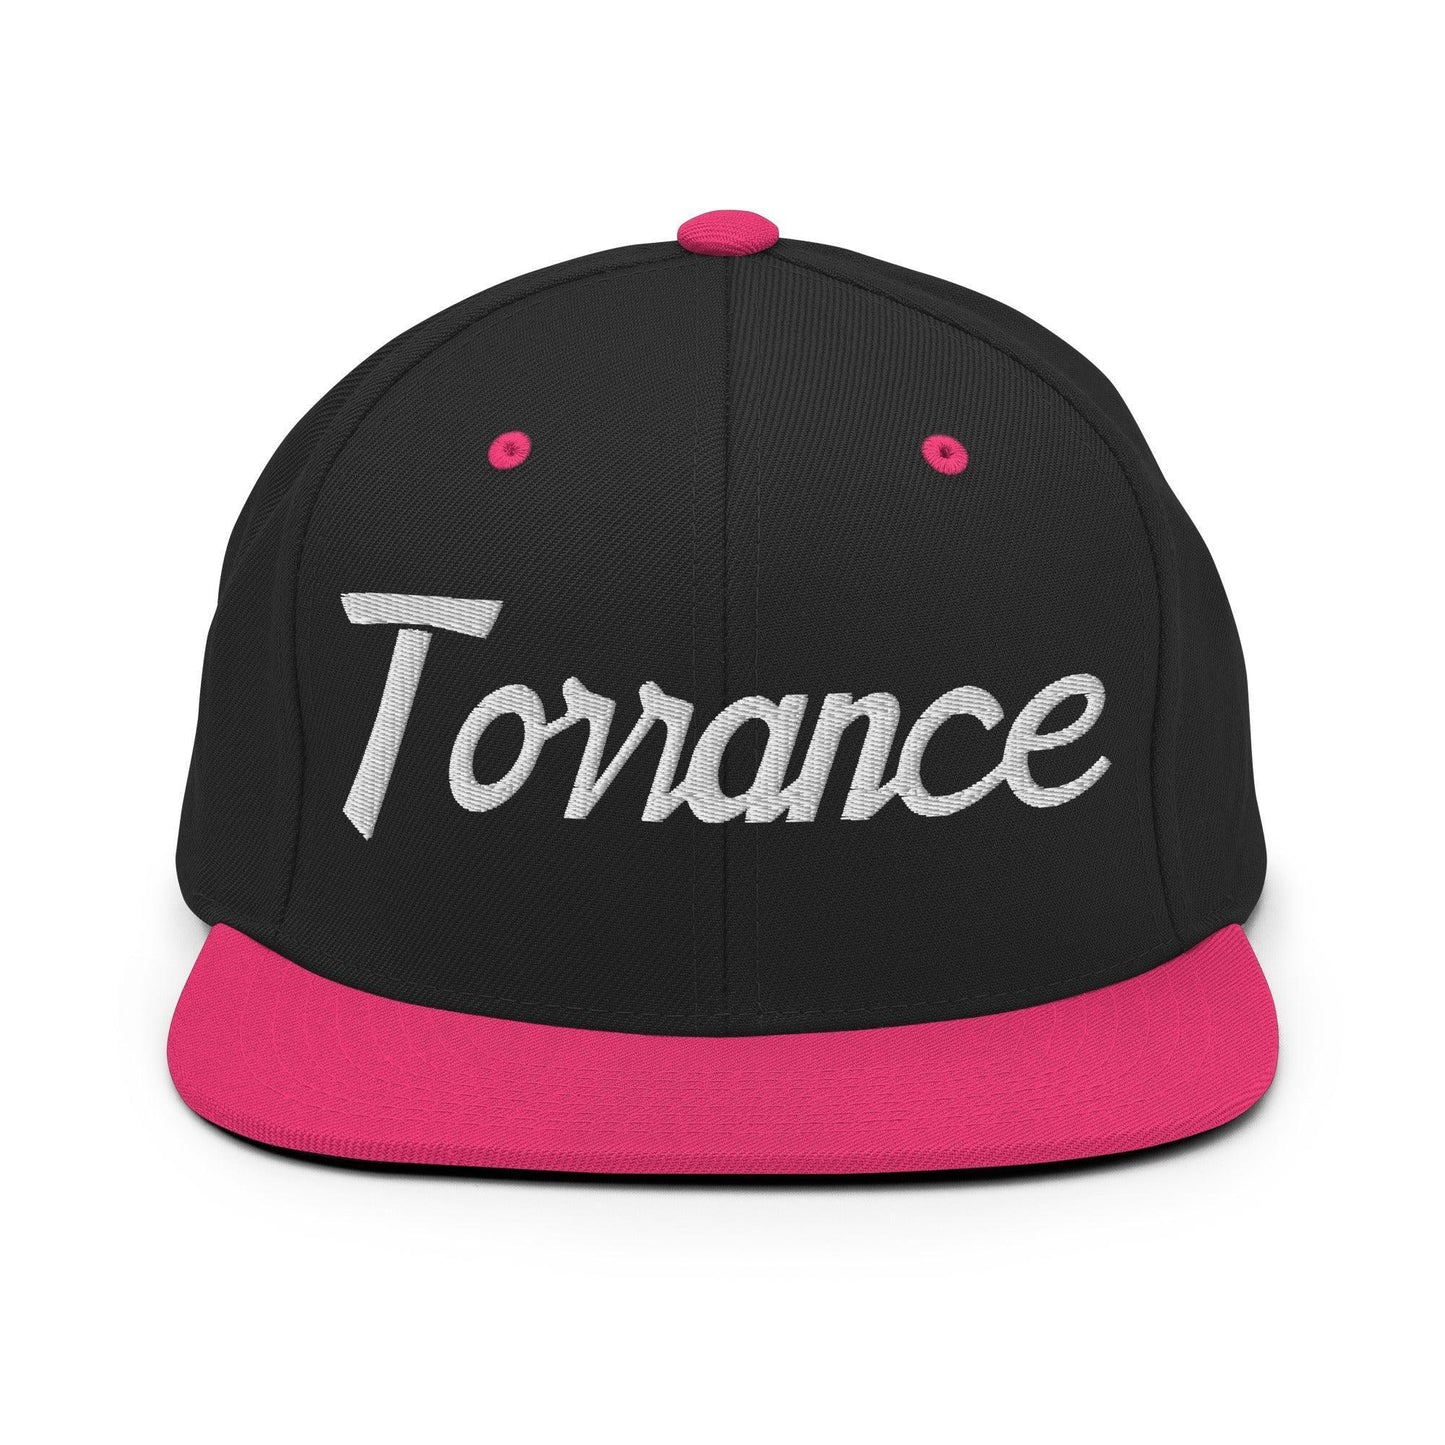 Torrance Script Snapback Hat Black Neon Pink